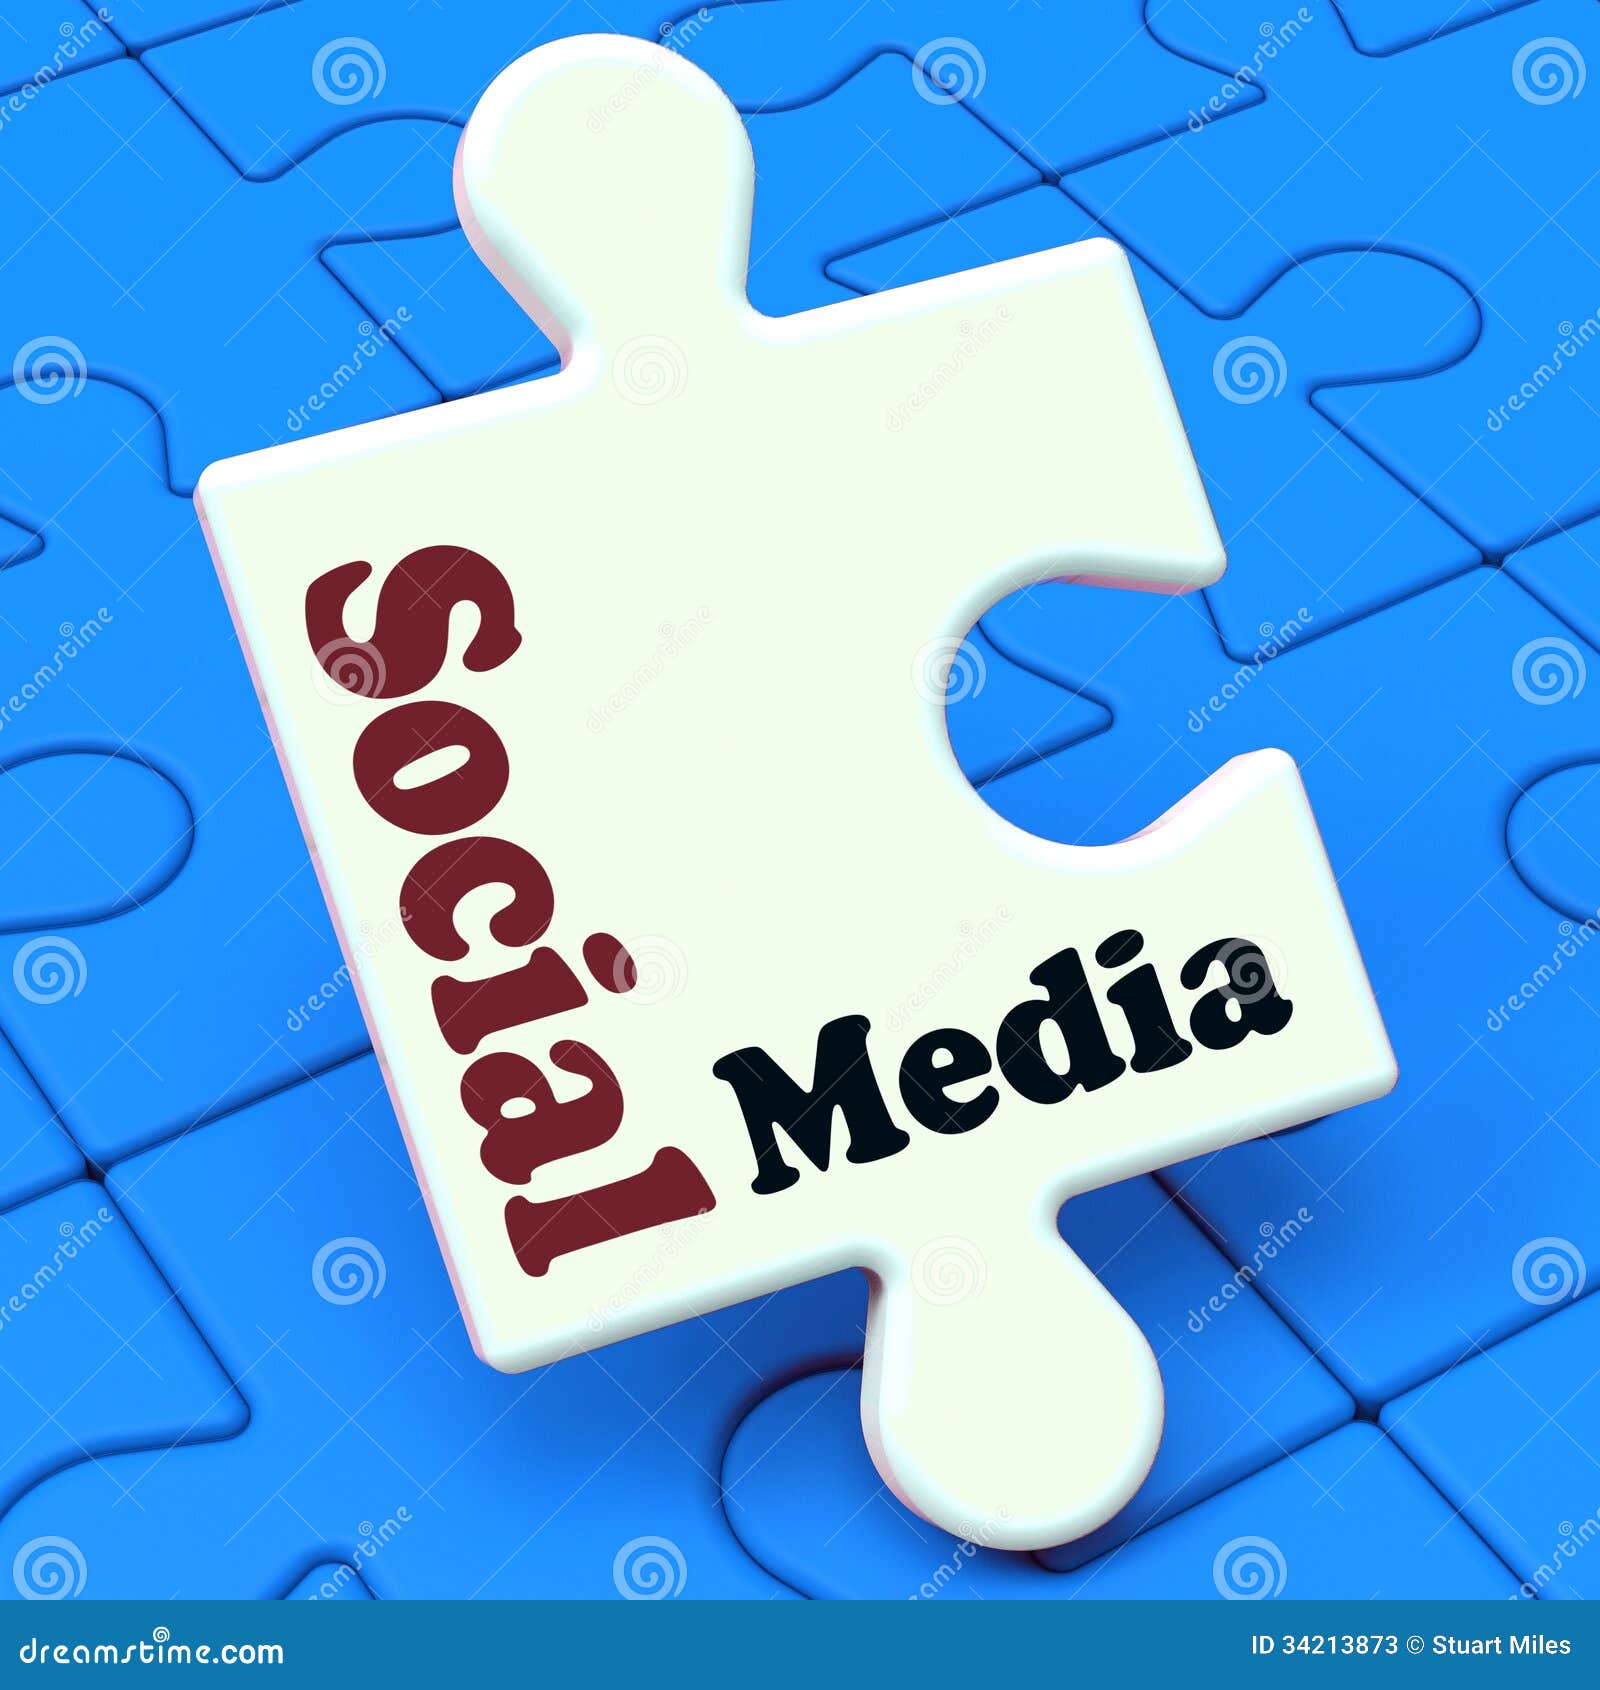 social media puzzle shows online community relation